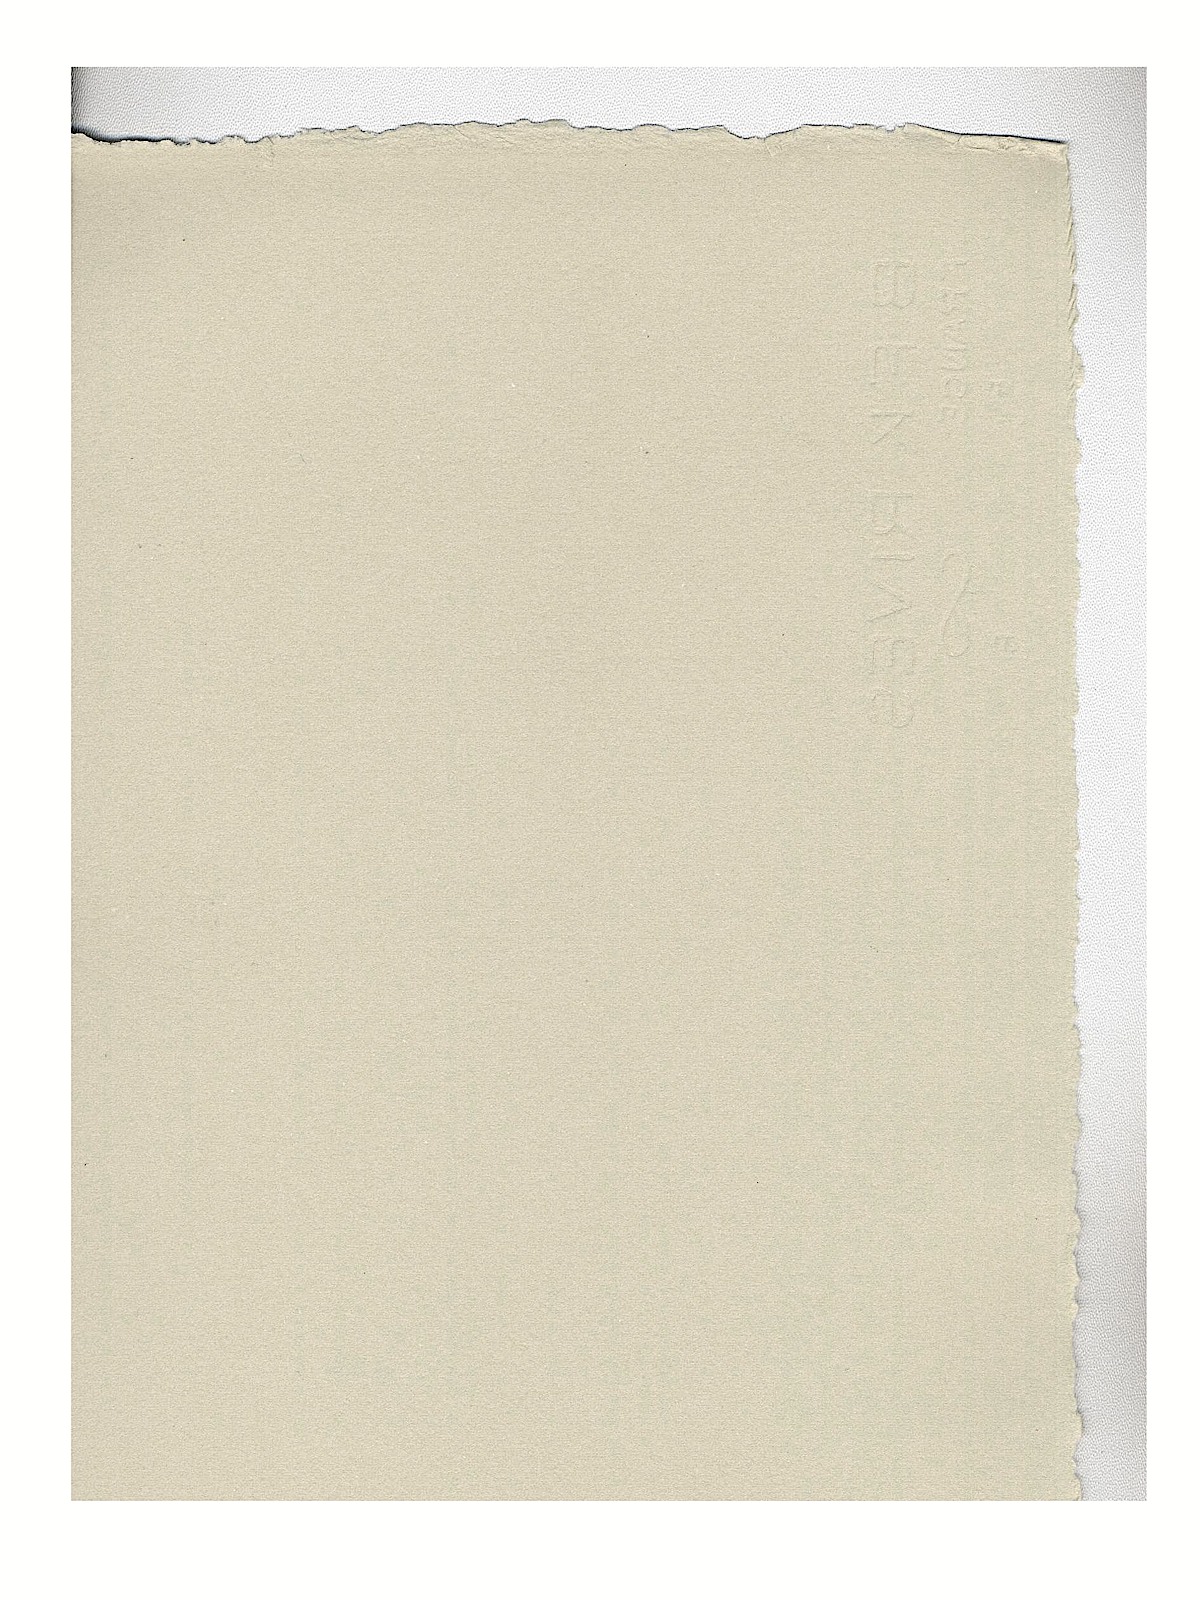 Rives Bfk Printmaking Paper 30 In. X 44 In. Sheet Gray 280 Gm